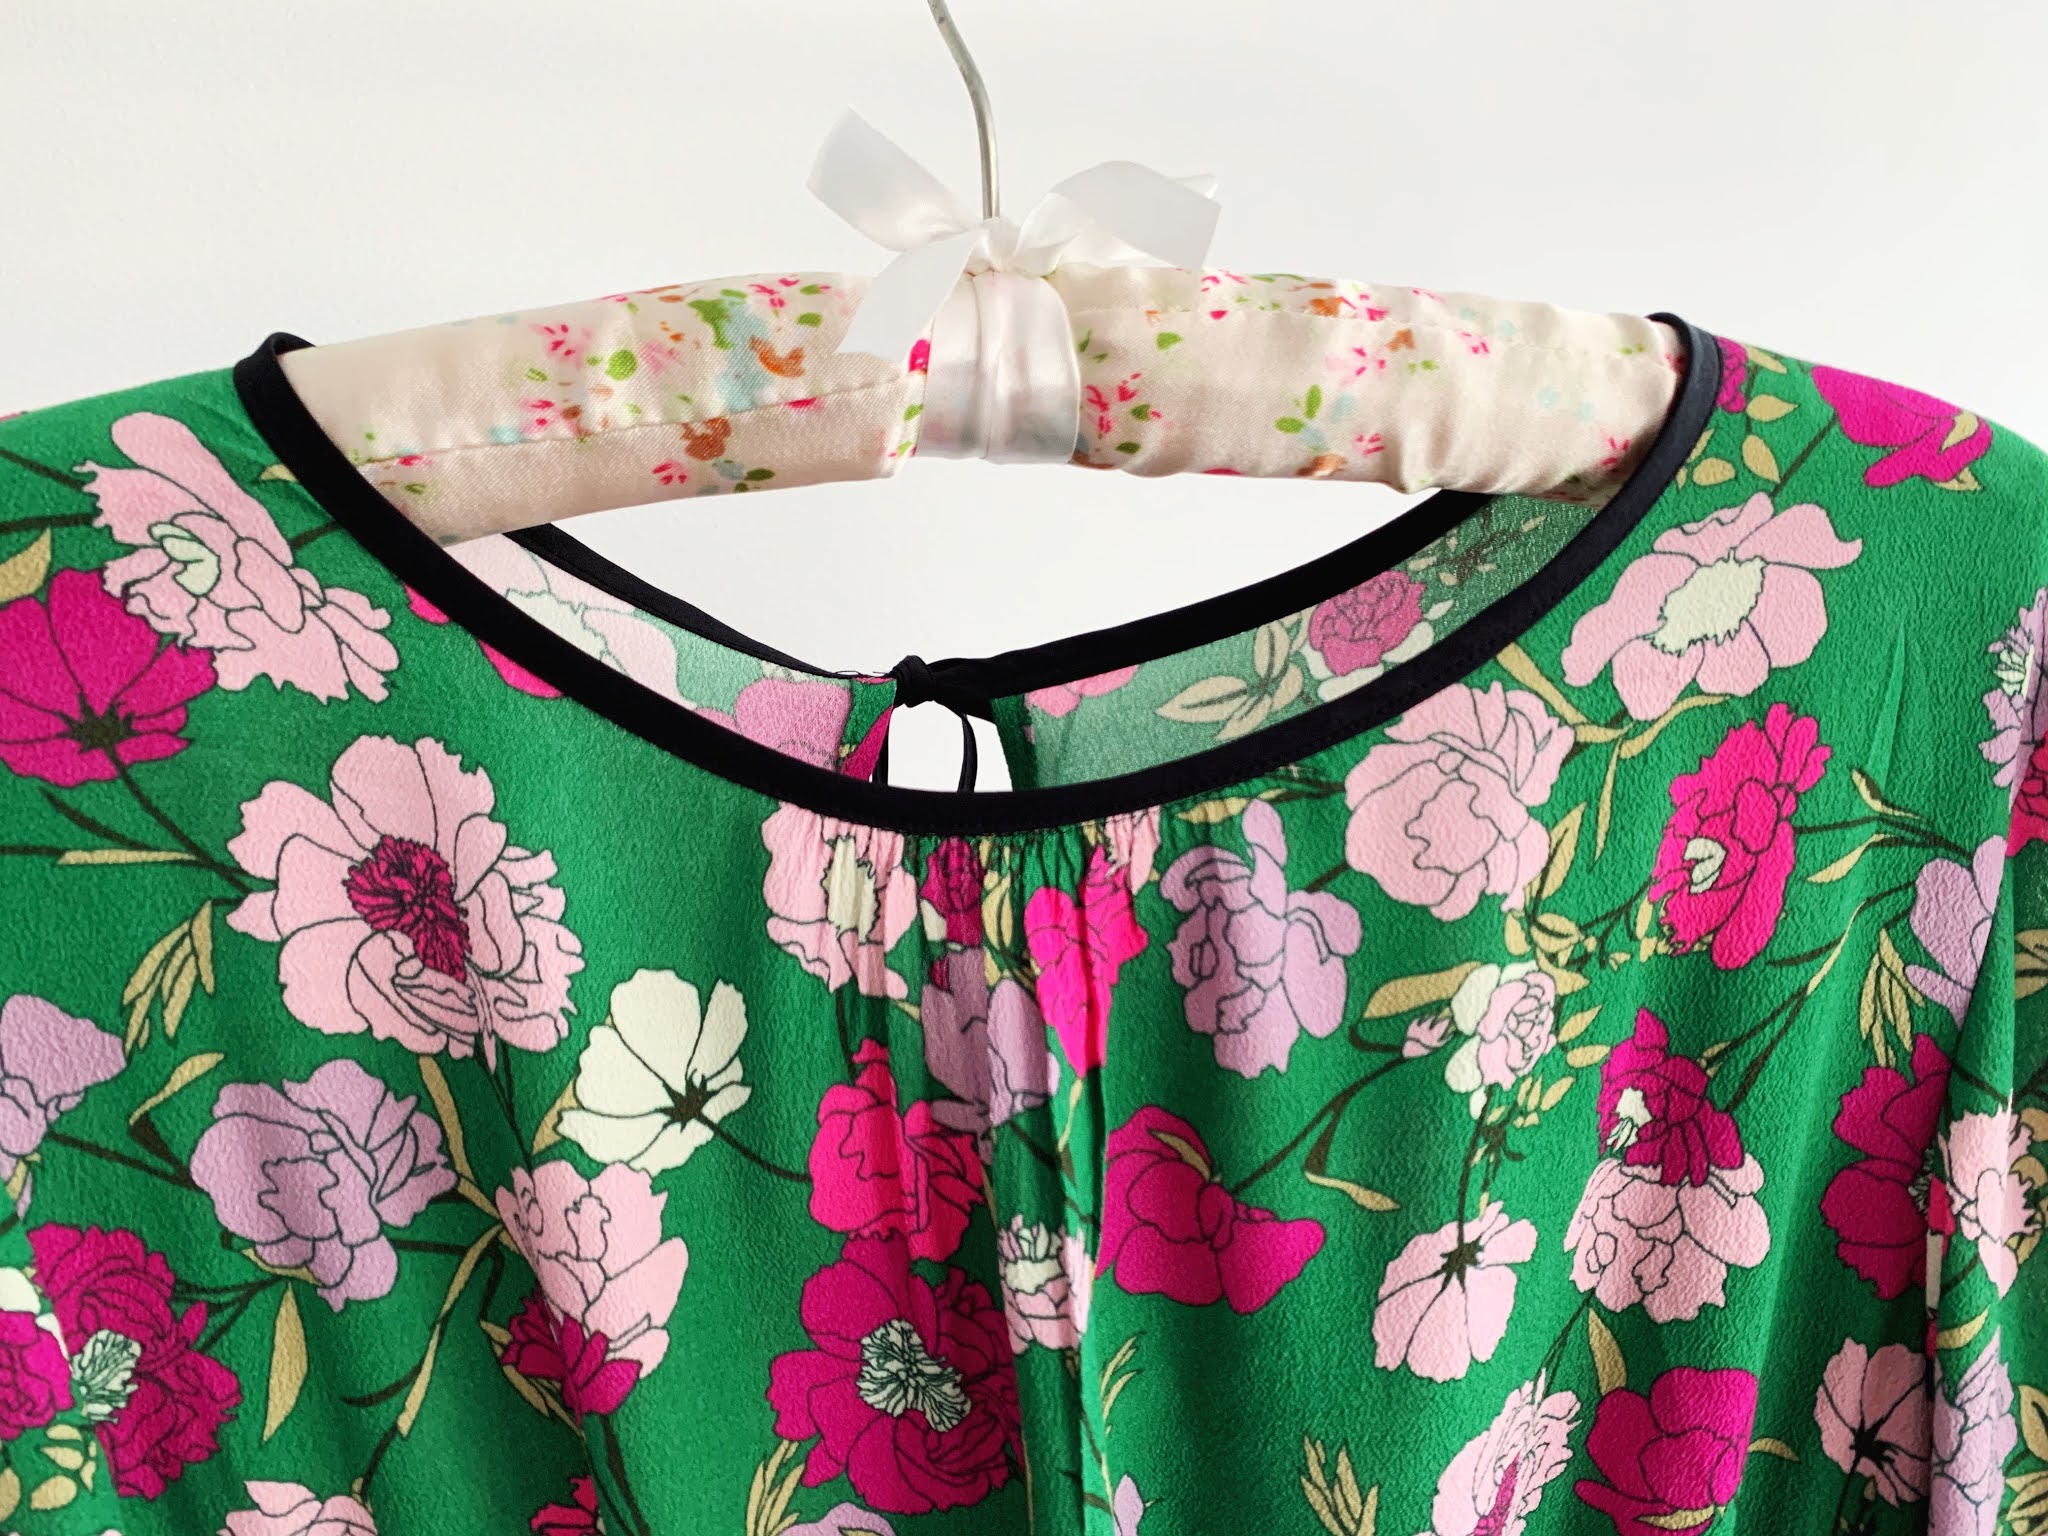 Bloom's Endless Summer: Stylearc Asha Dress